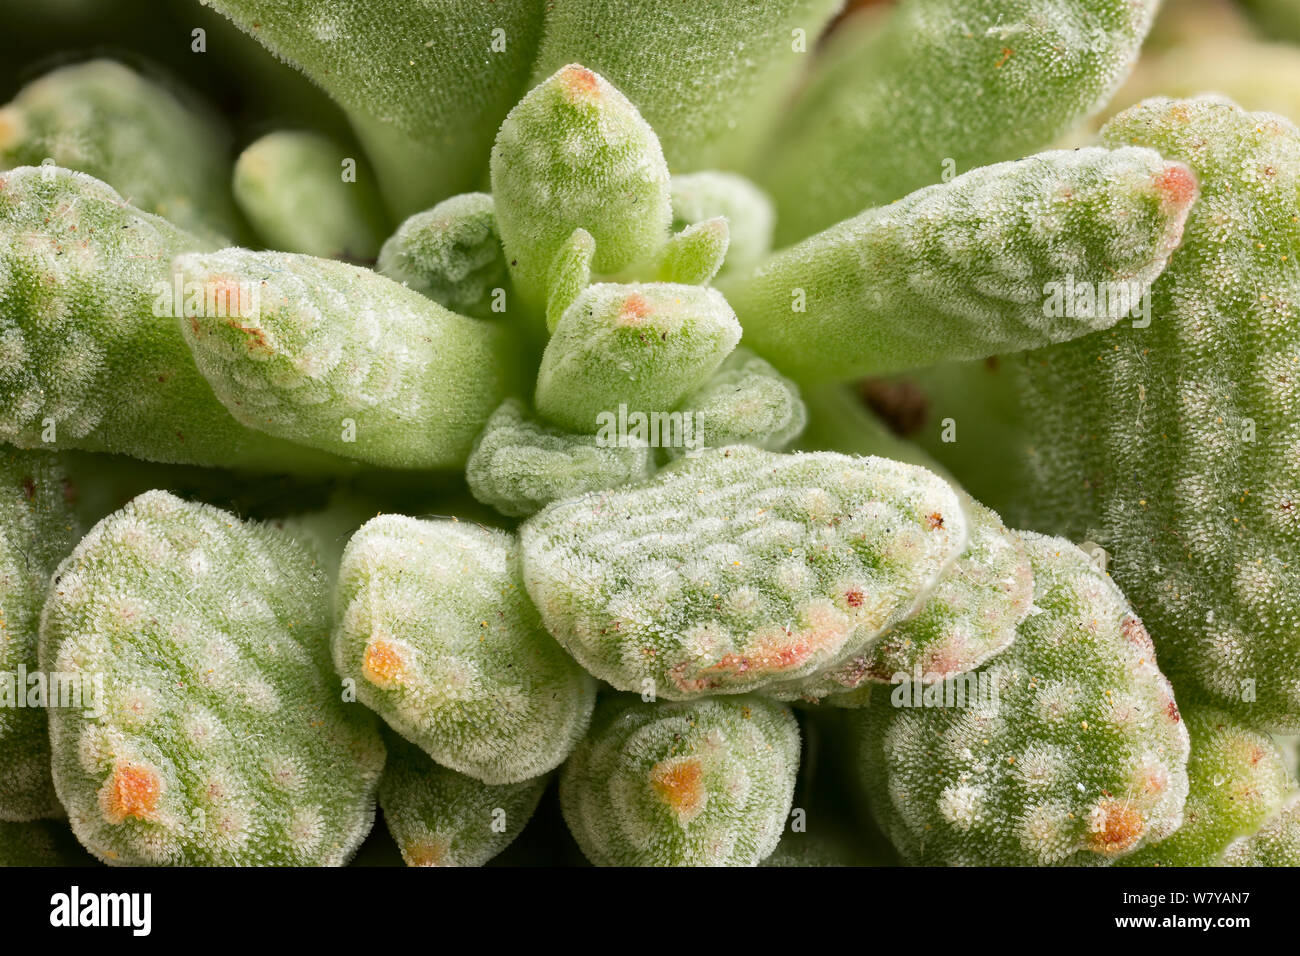 Succulent (Crassula ausensis) leaf detail, showing papillae. Occurs in Southern Africa. Image taken using digital focus-stacking. Stock Photo